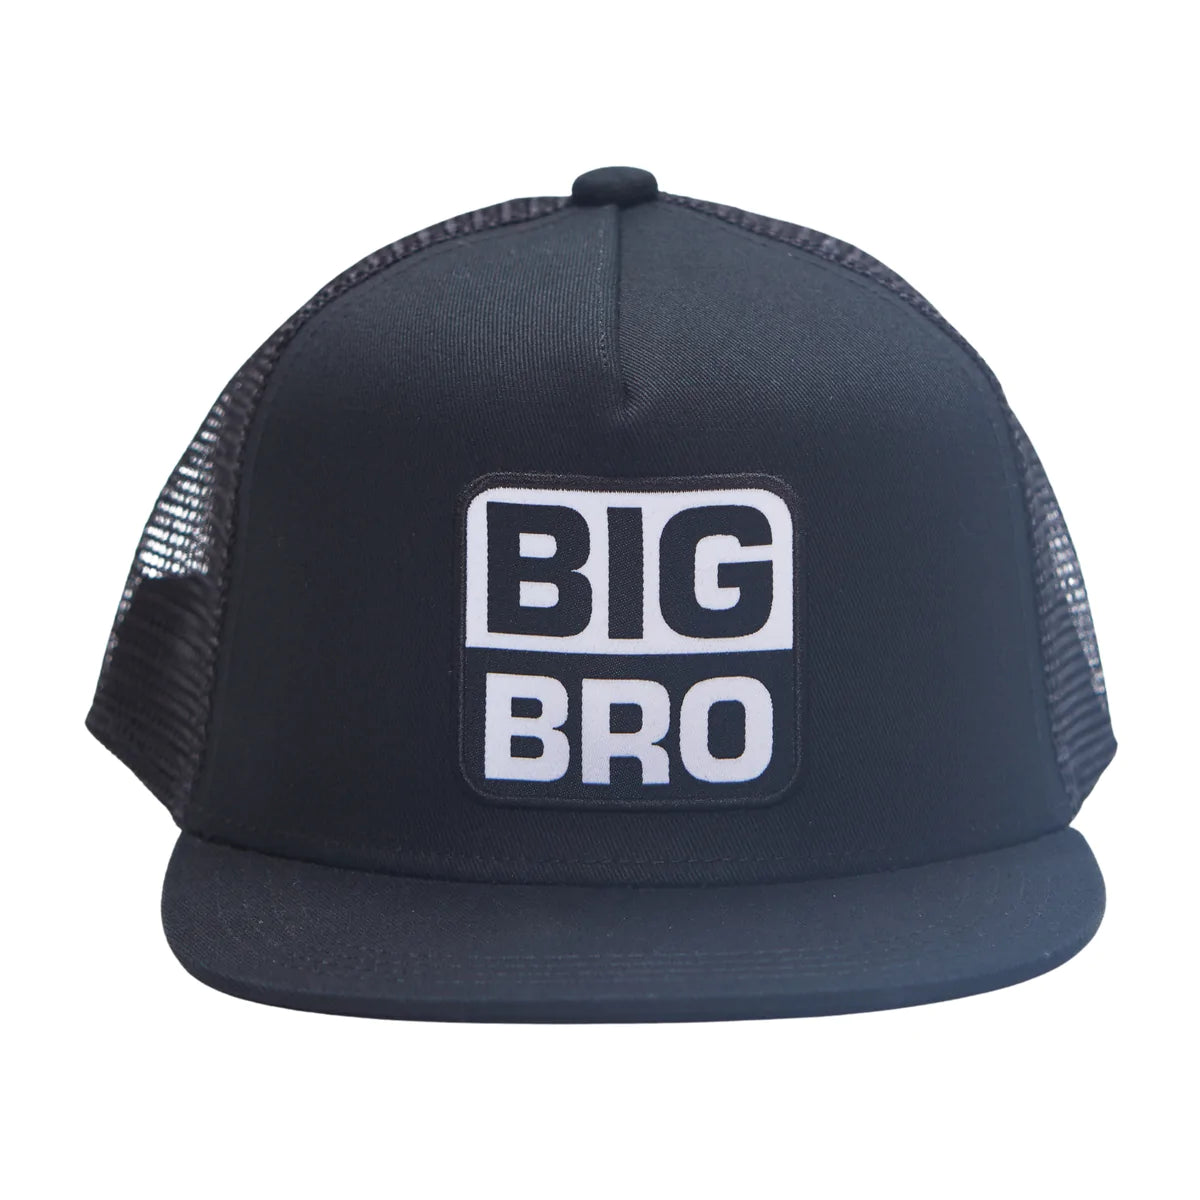 Big Bro Mesh Trucker Snapback Hat